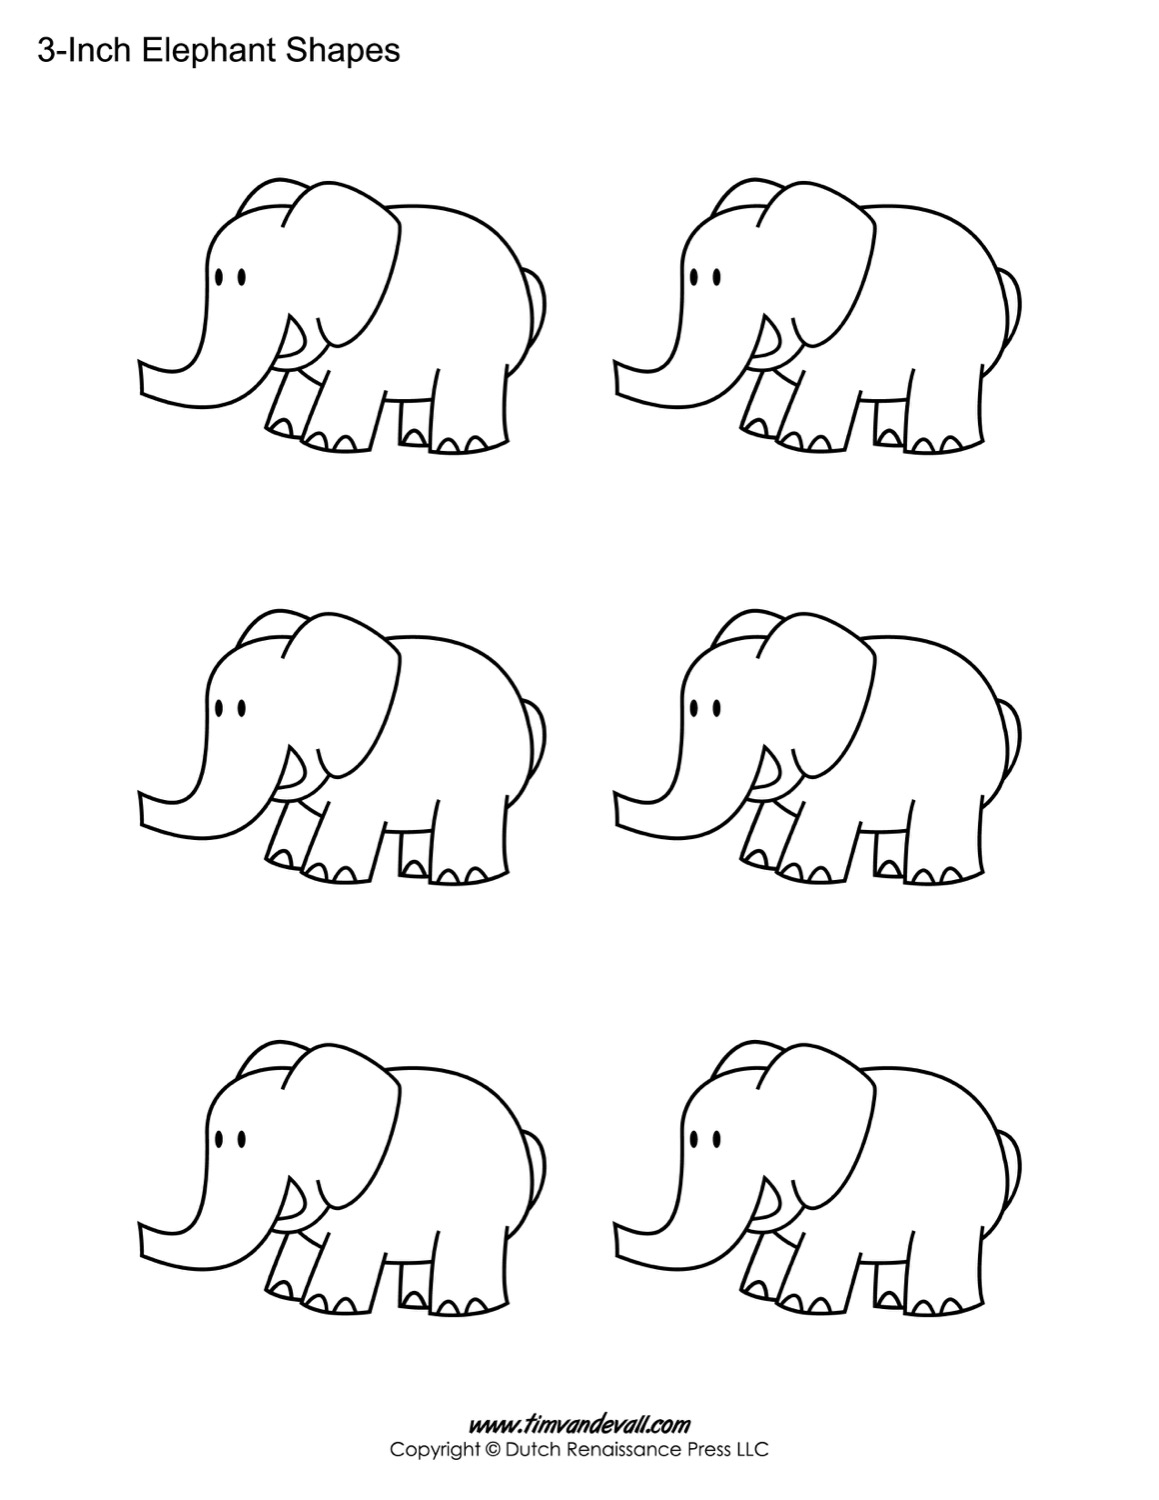 Printable elephant templates for kids â tims printables